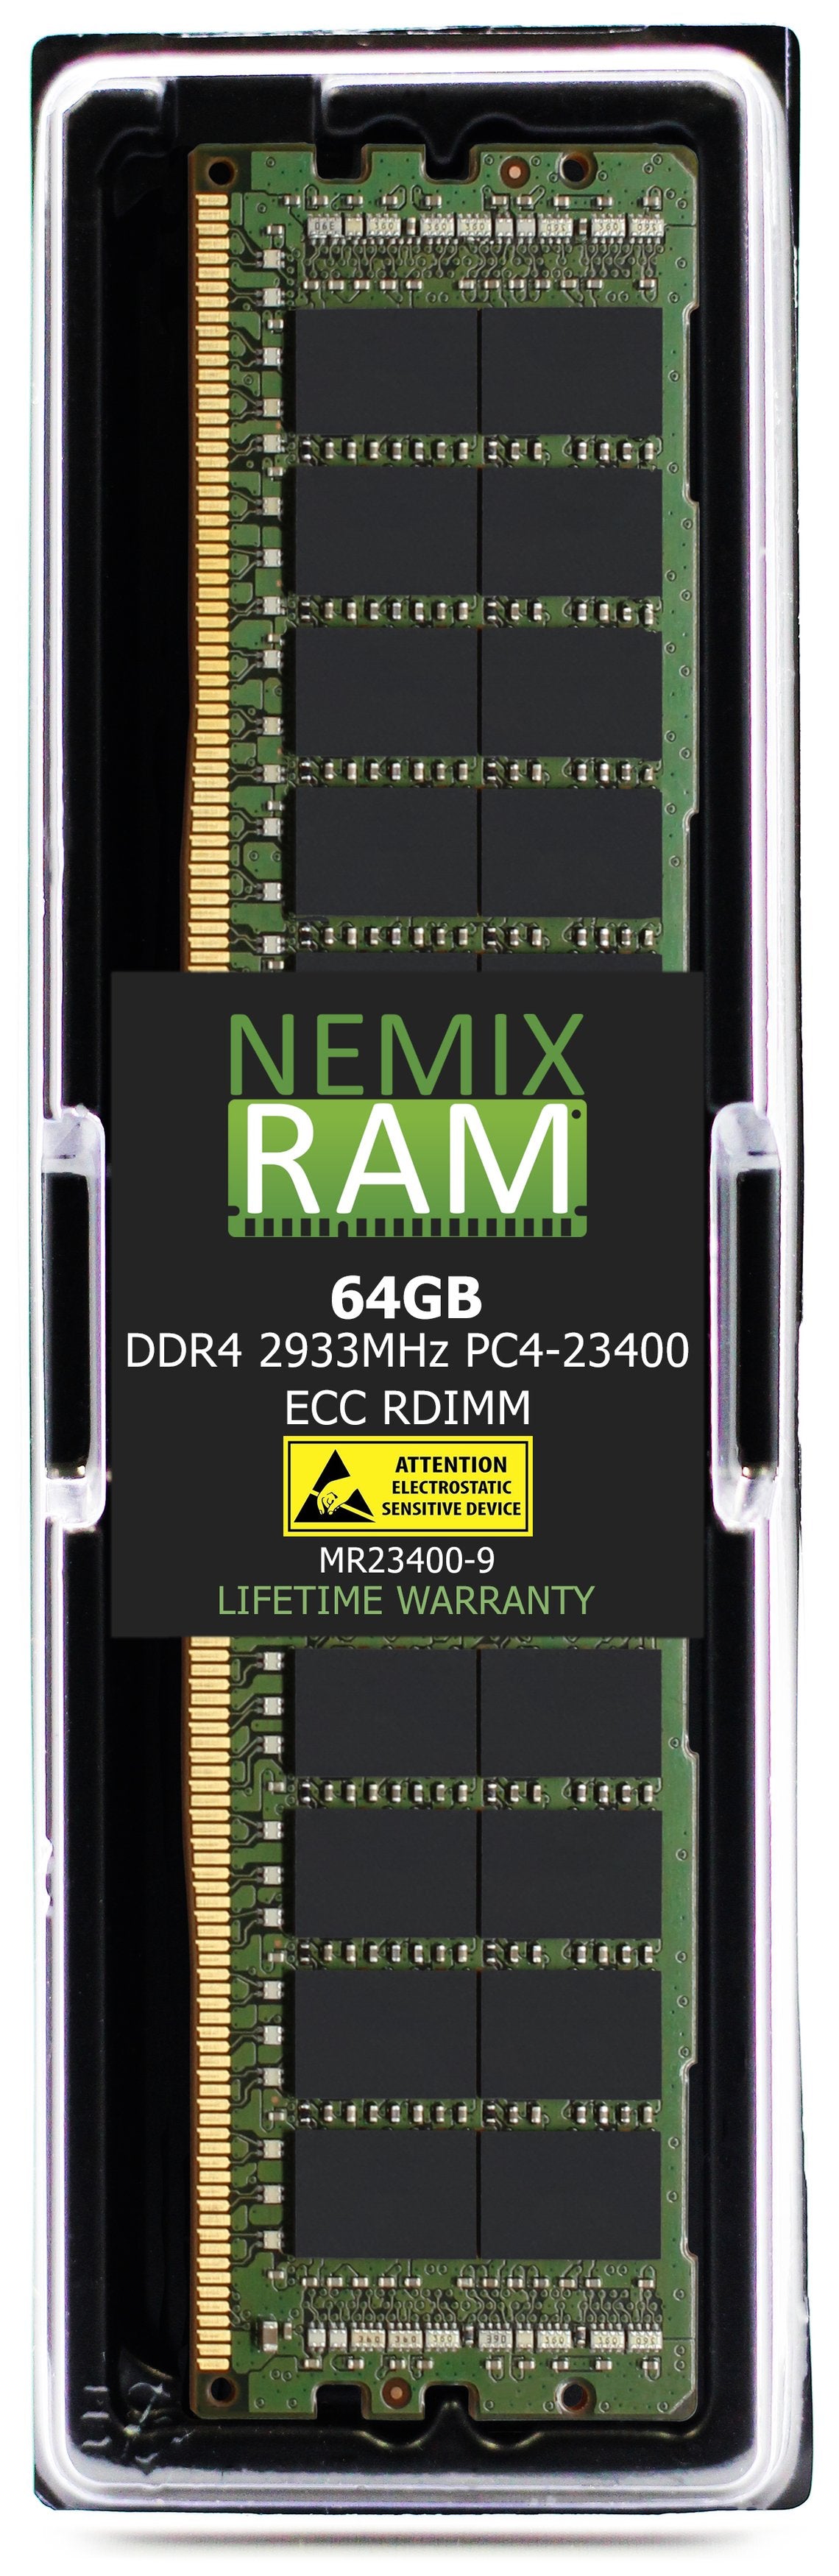 64GB DDR4 2933MHZ PC4-23400 RDIMM Compatible with Supermicro MEM-DR464MC-ER29